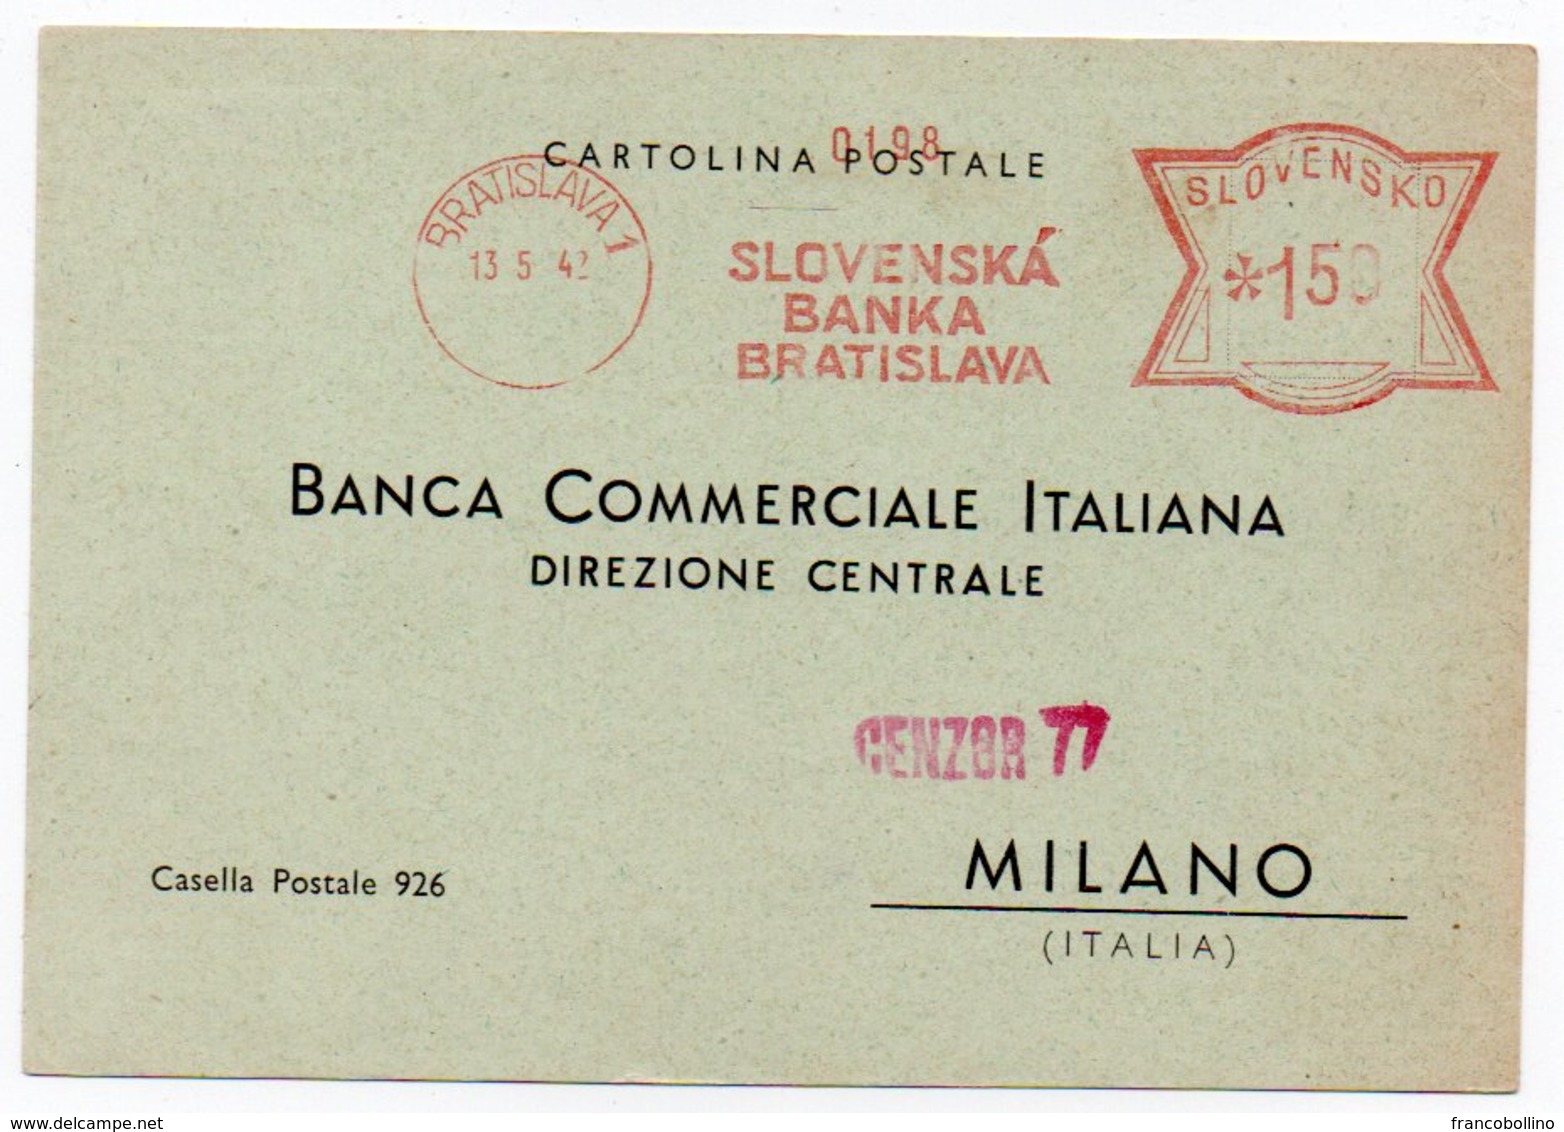 SLOVAKIA - SLOVENSKA BANKA BRATISLAVA 1942 - RED METER/EMA / CENSORED - Storia Postale